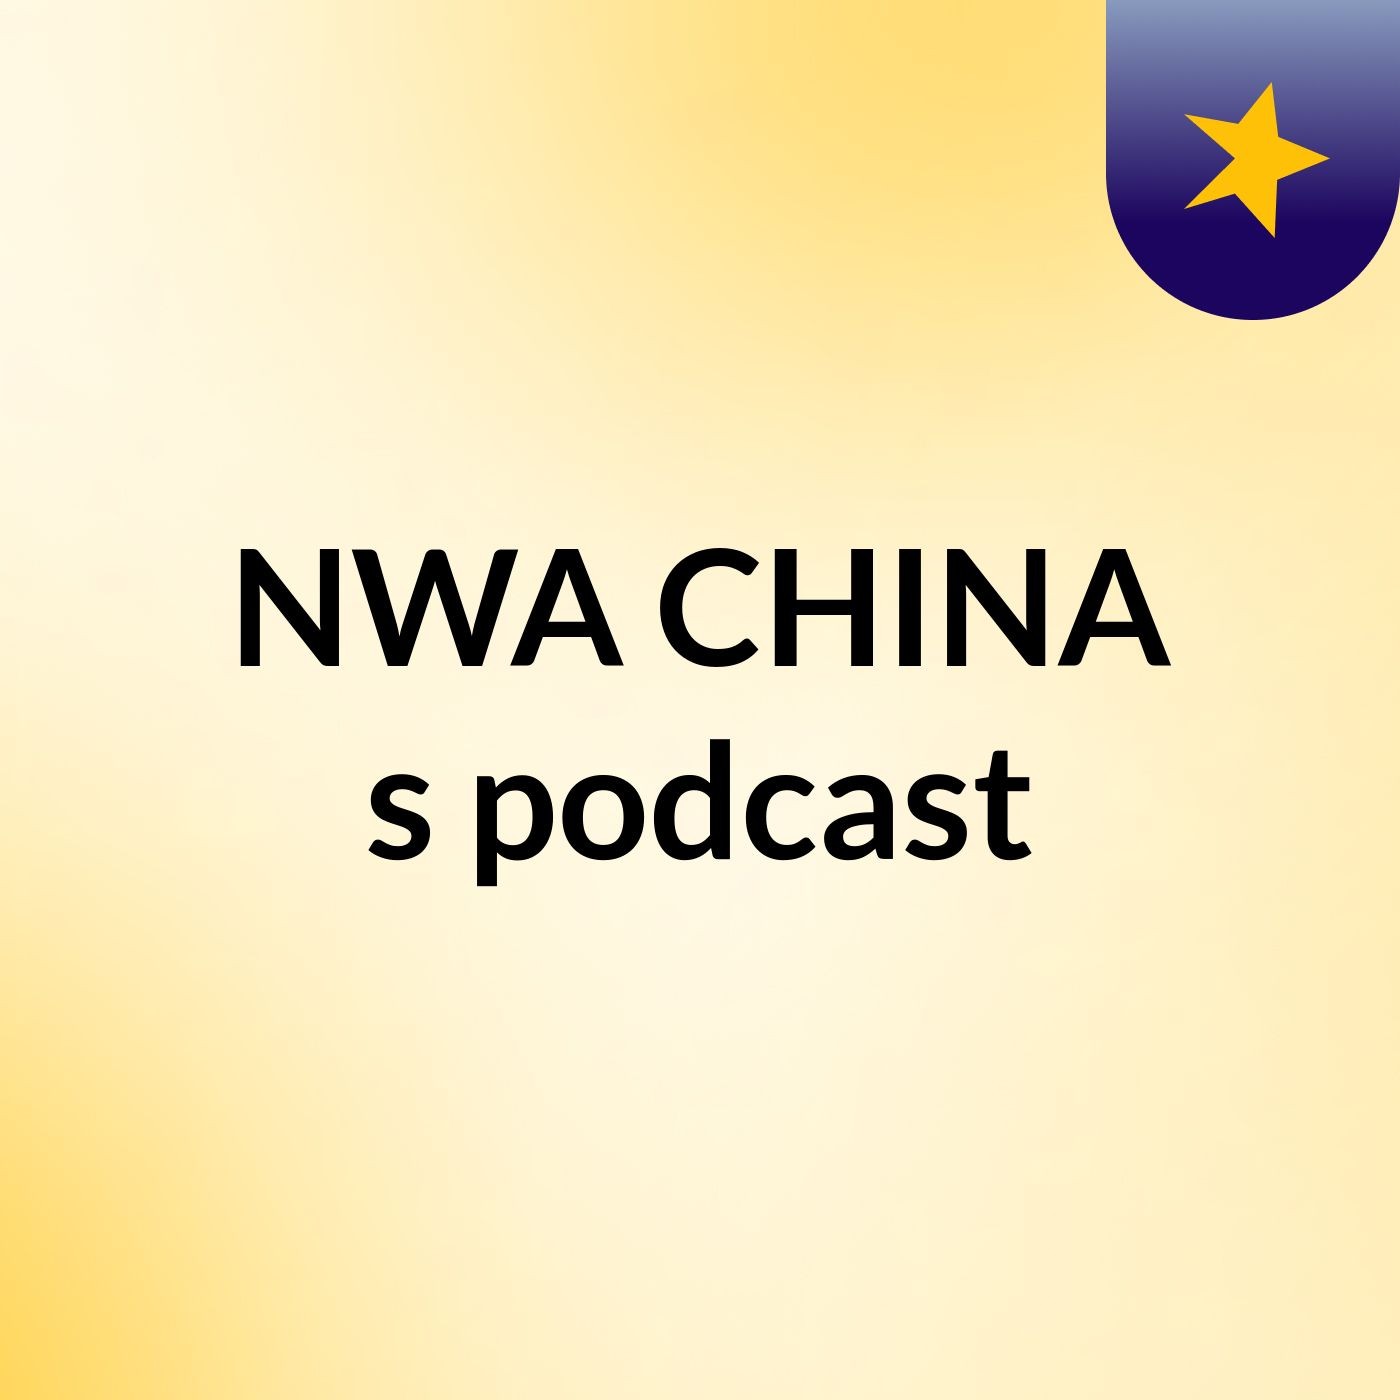 NWA CHINA's podcast